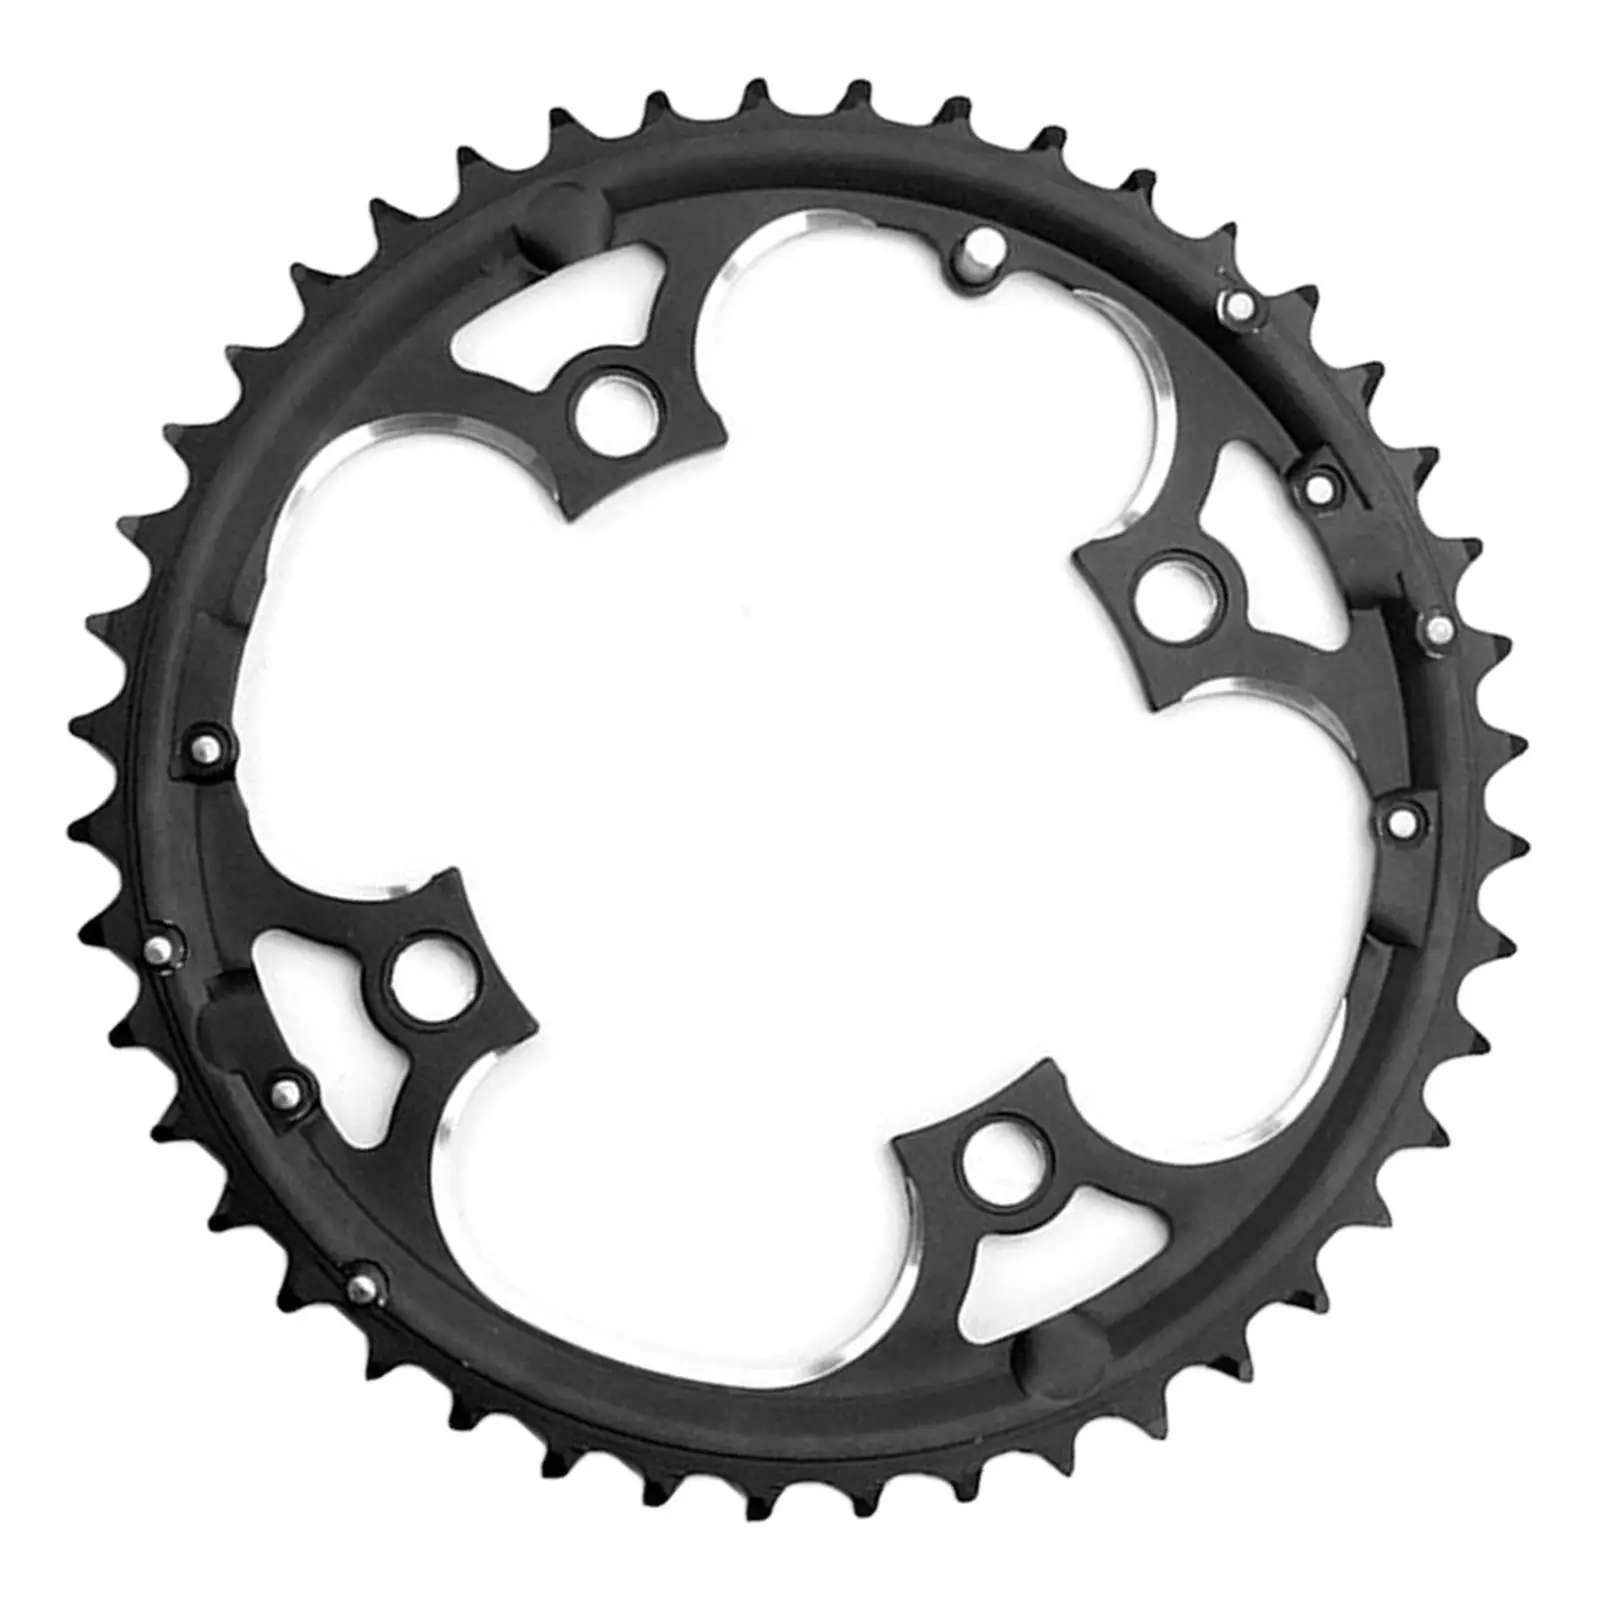 Round Bike Chainring BCD 104mm Sprocket Bicycle Crankset Chainwheel Chain Ring for Mountain Bike Folding Bike Parts